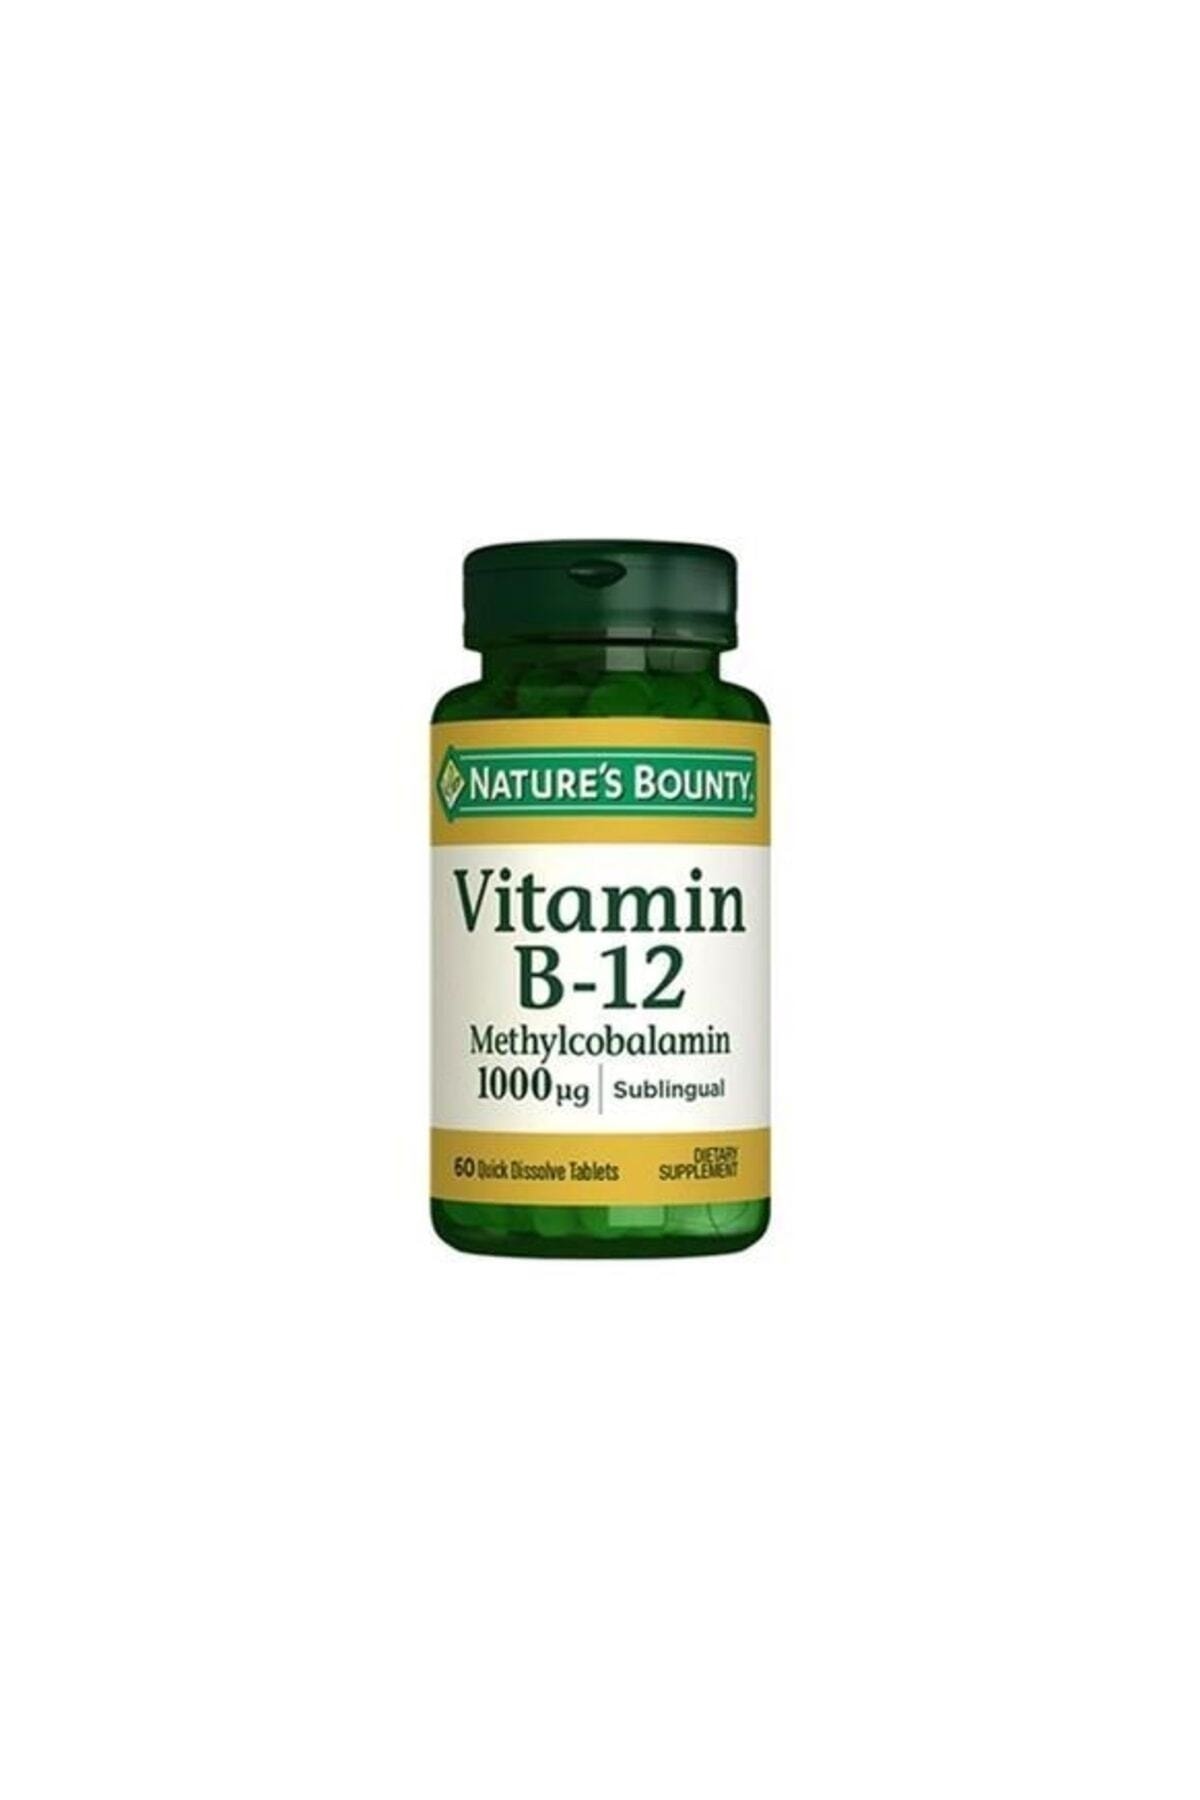 Nature‘s Bounty Vitamin B-12 Methylcobalamin 1000uq 60 Tablet